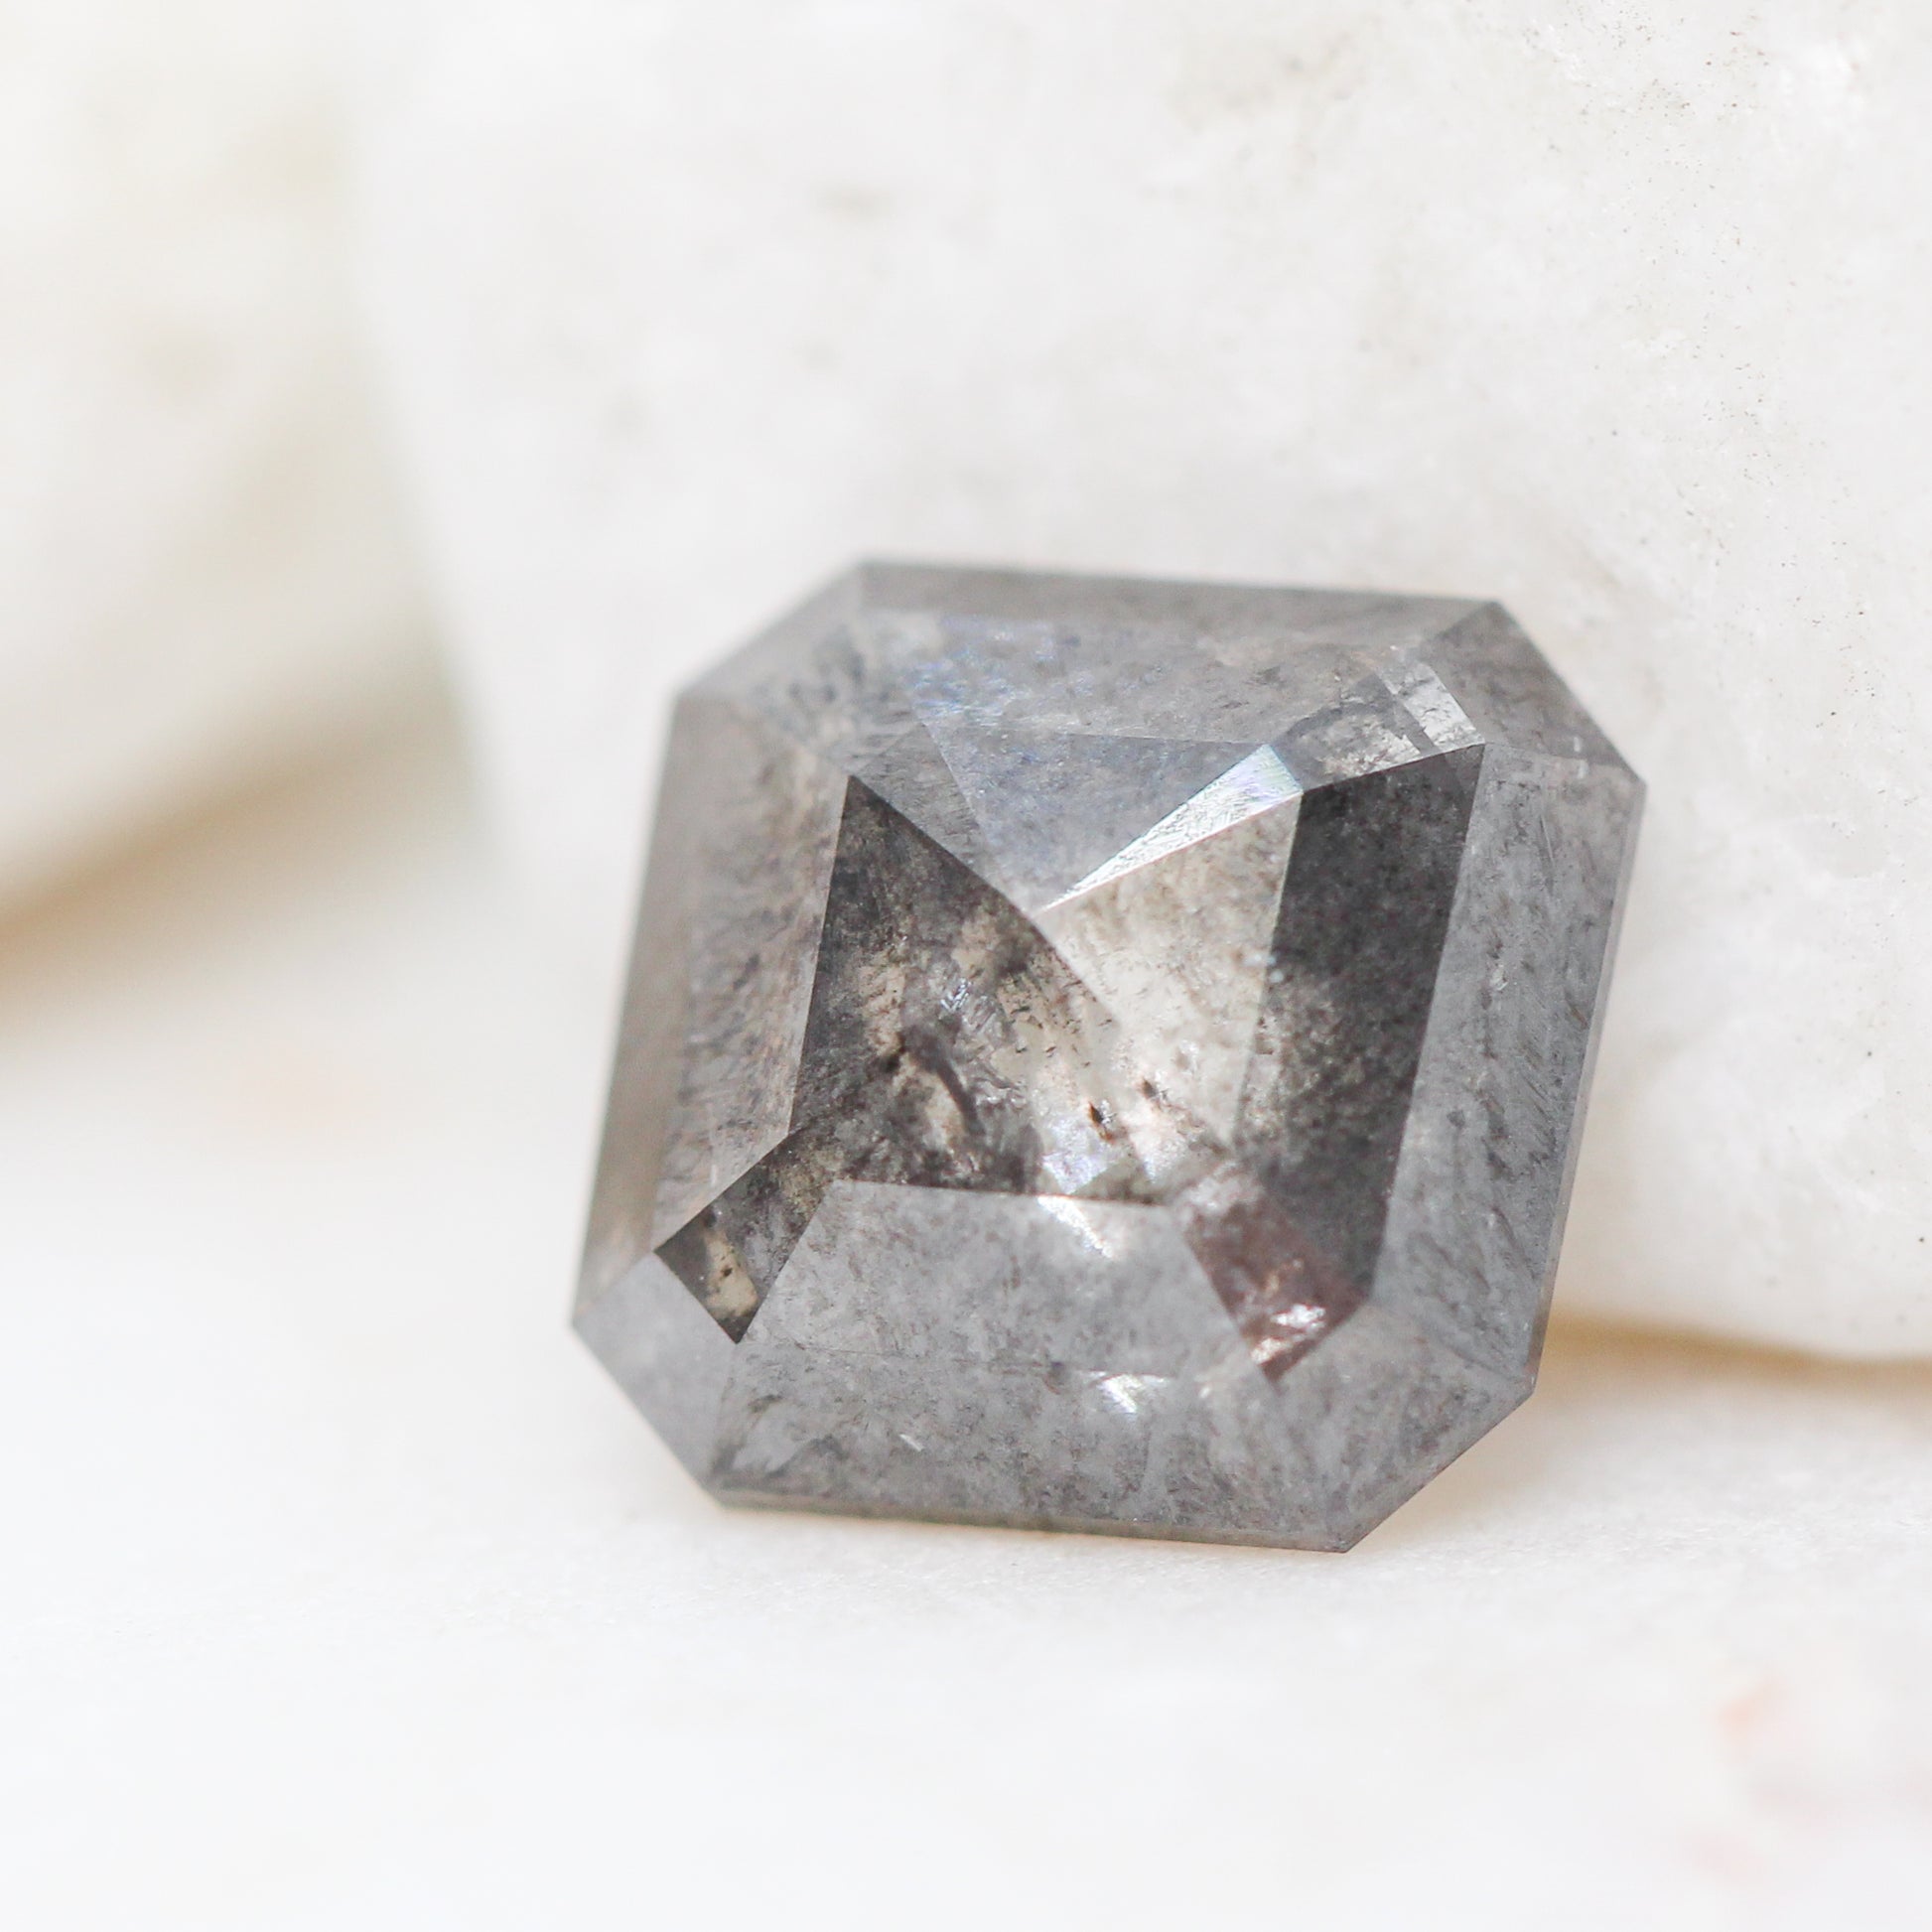 2.29 Carat Asscher Cut Dark Celestial Diamond for Custom Work - Inventory Code DCA229 - Midwinter Co. Alternative Bridal Rings and Modern Fine Jewelry